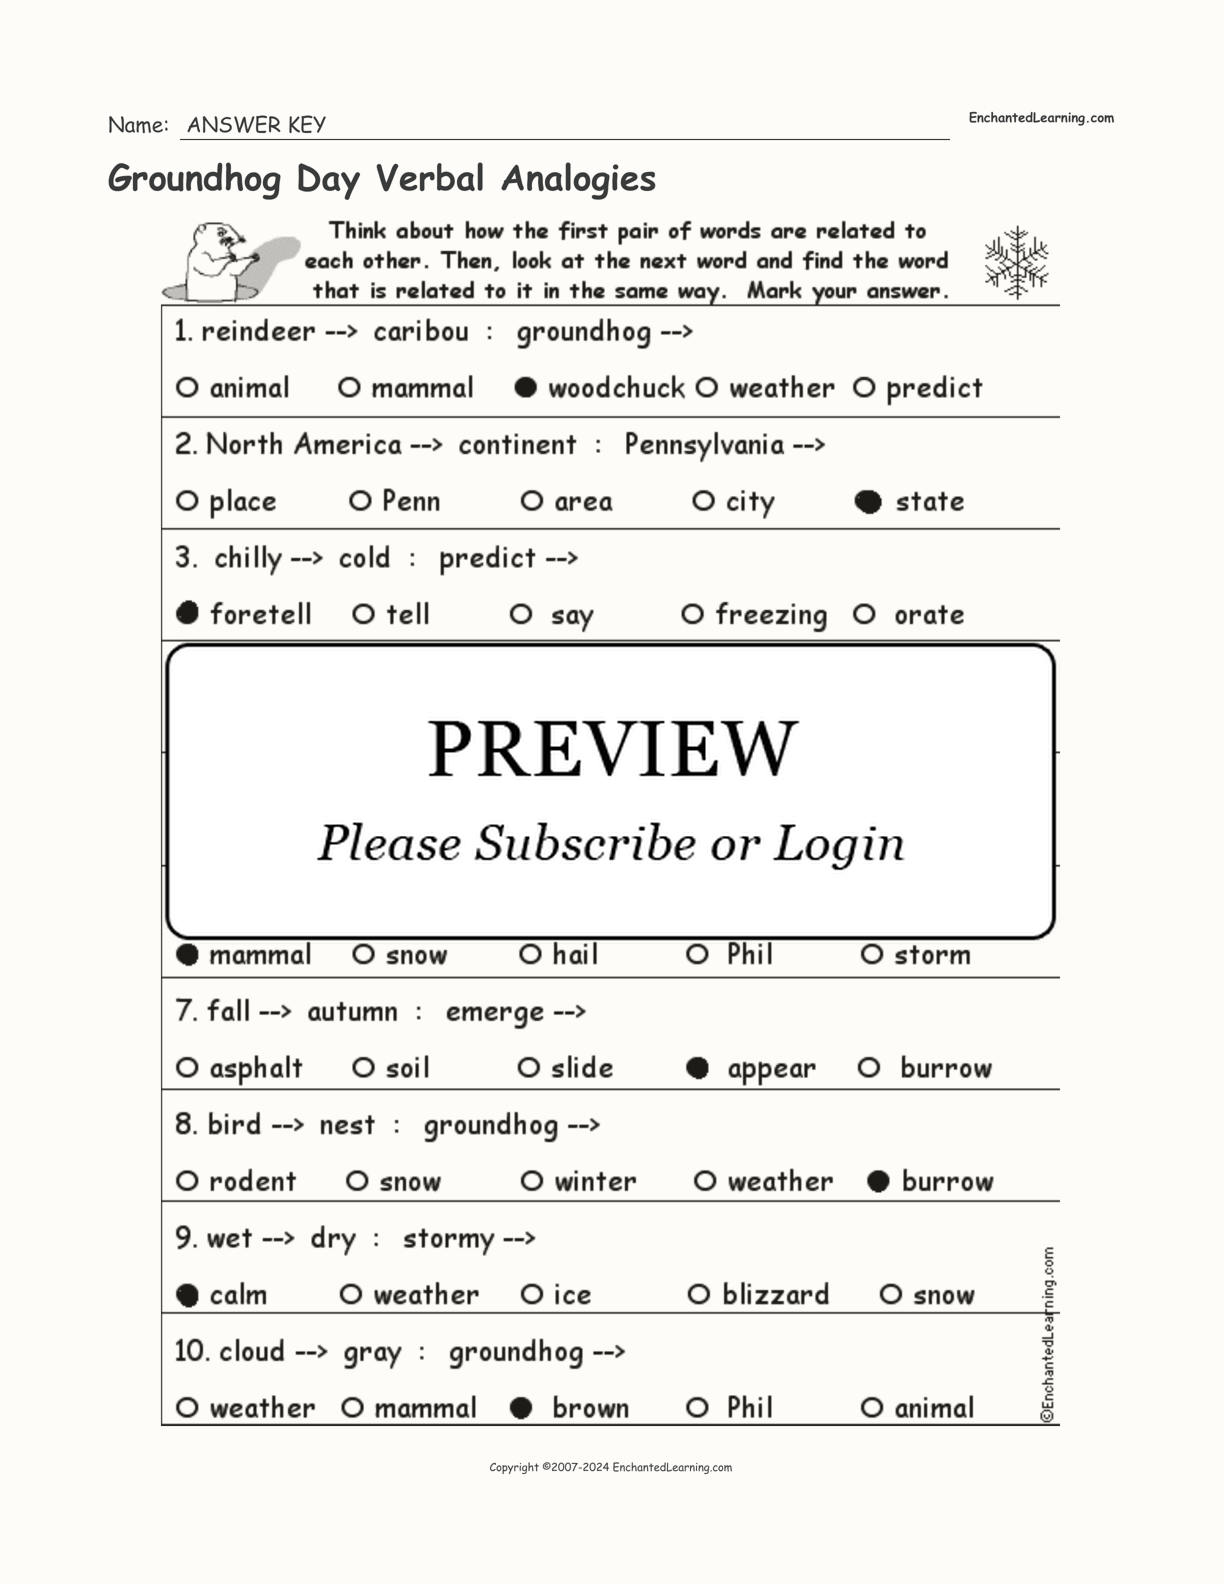 Groundhog Day Verbal Analogies interactive worksheet page 2